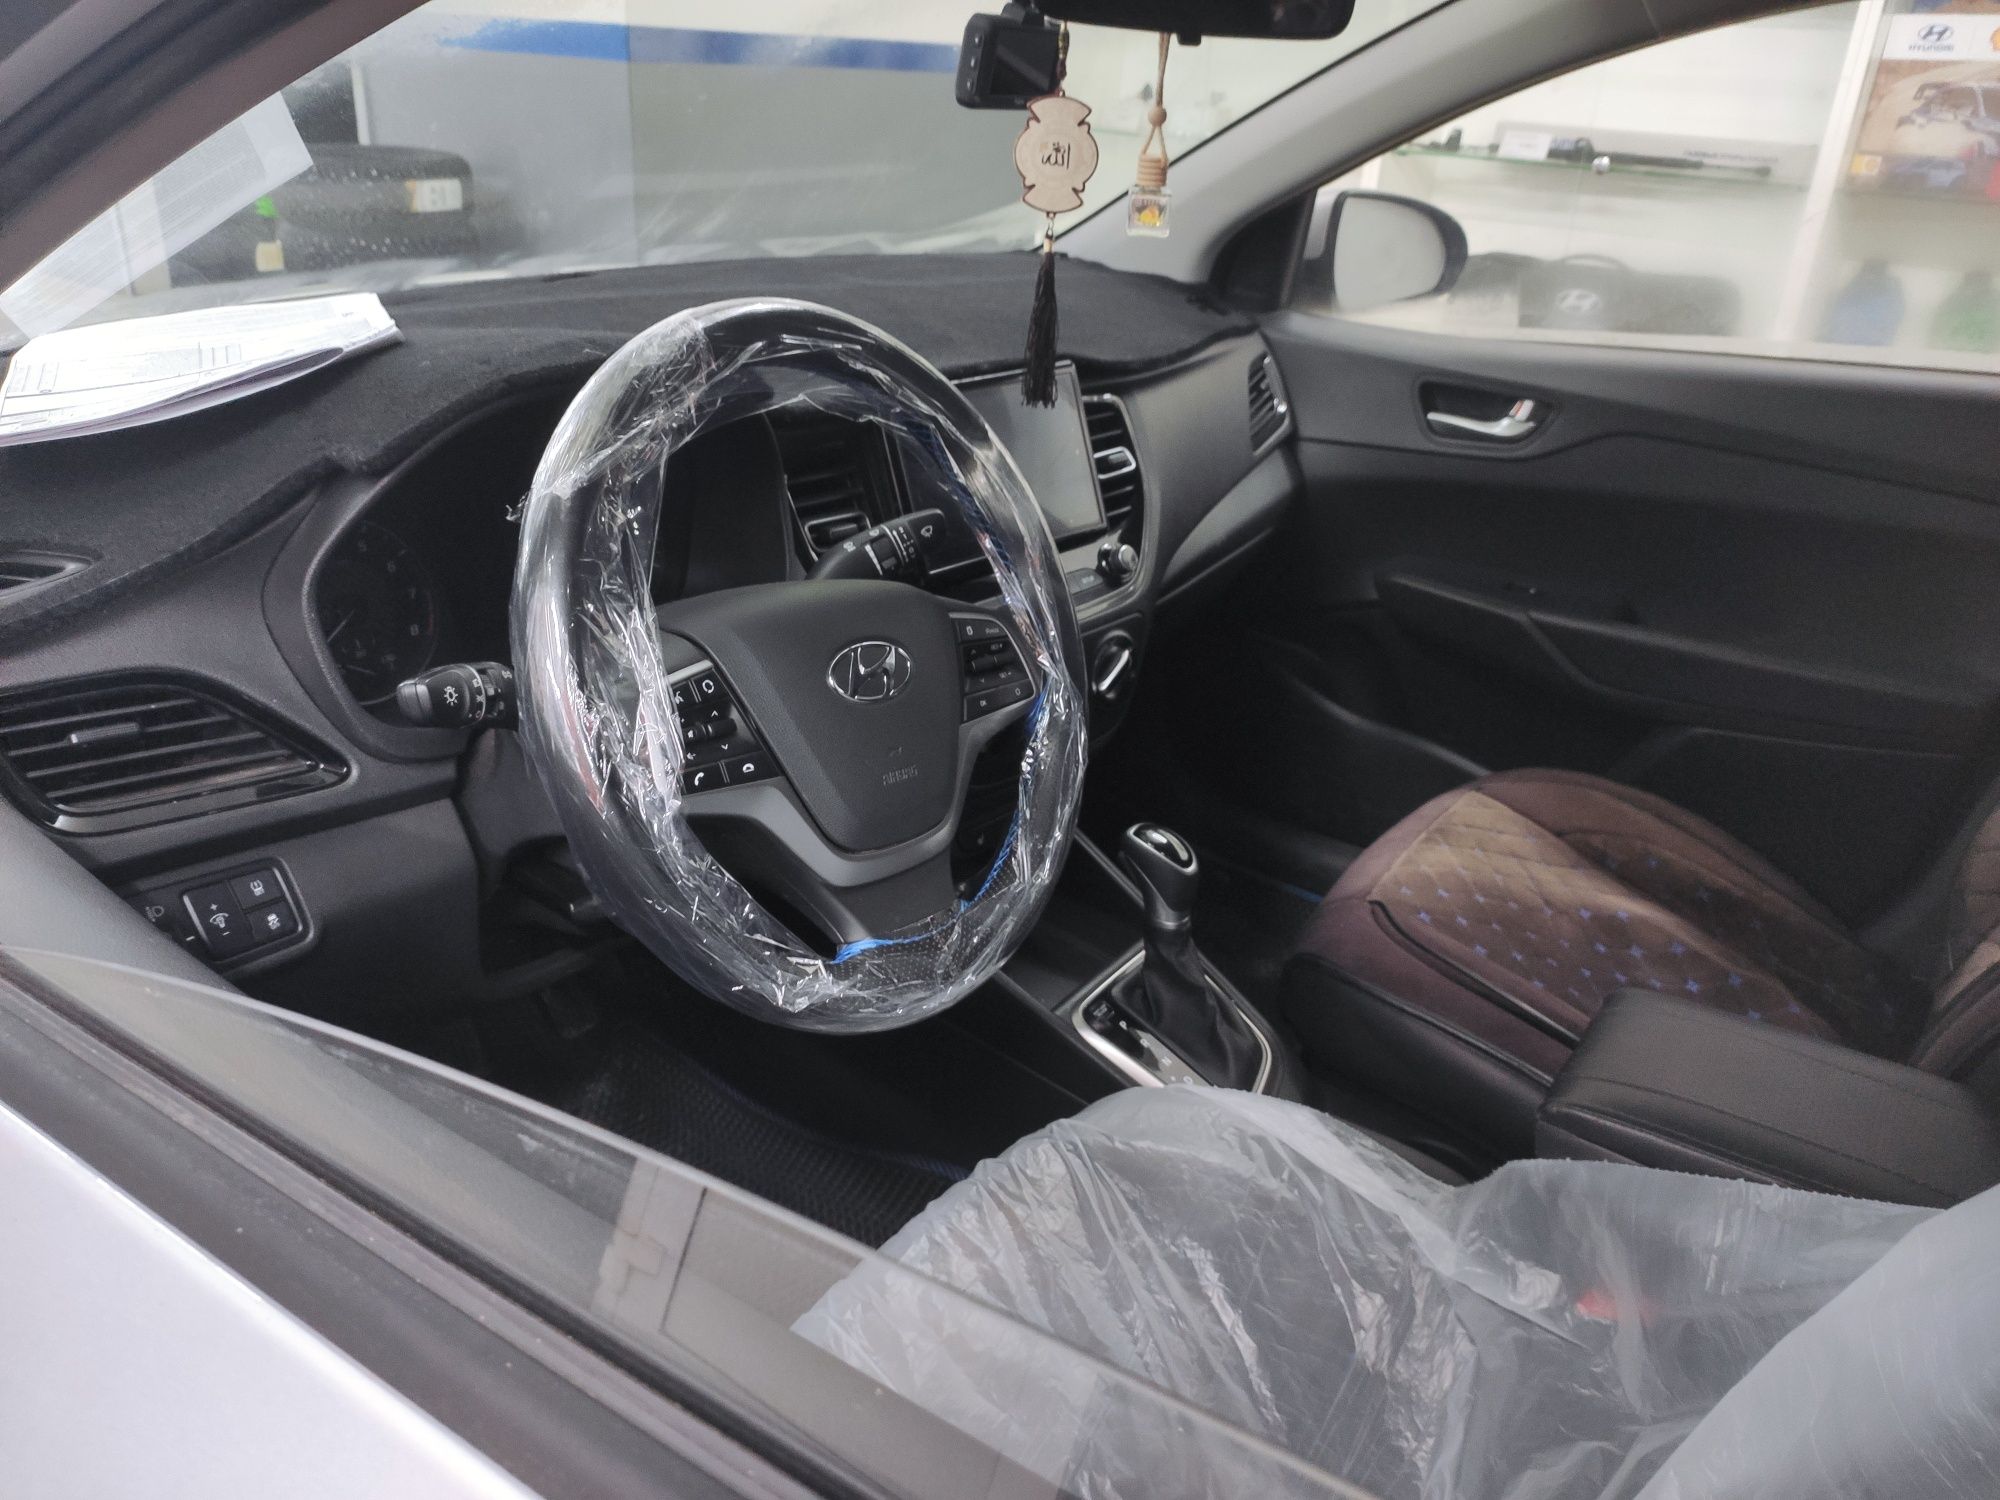 Hyundai Accent 2021 в родном окрасе, ТО пройдено, на гарантии.